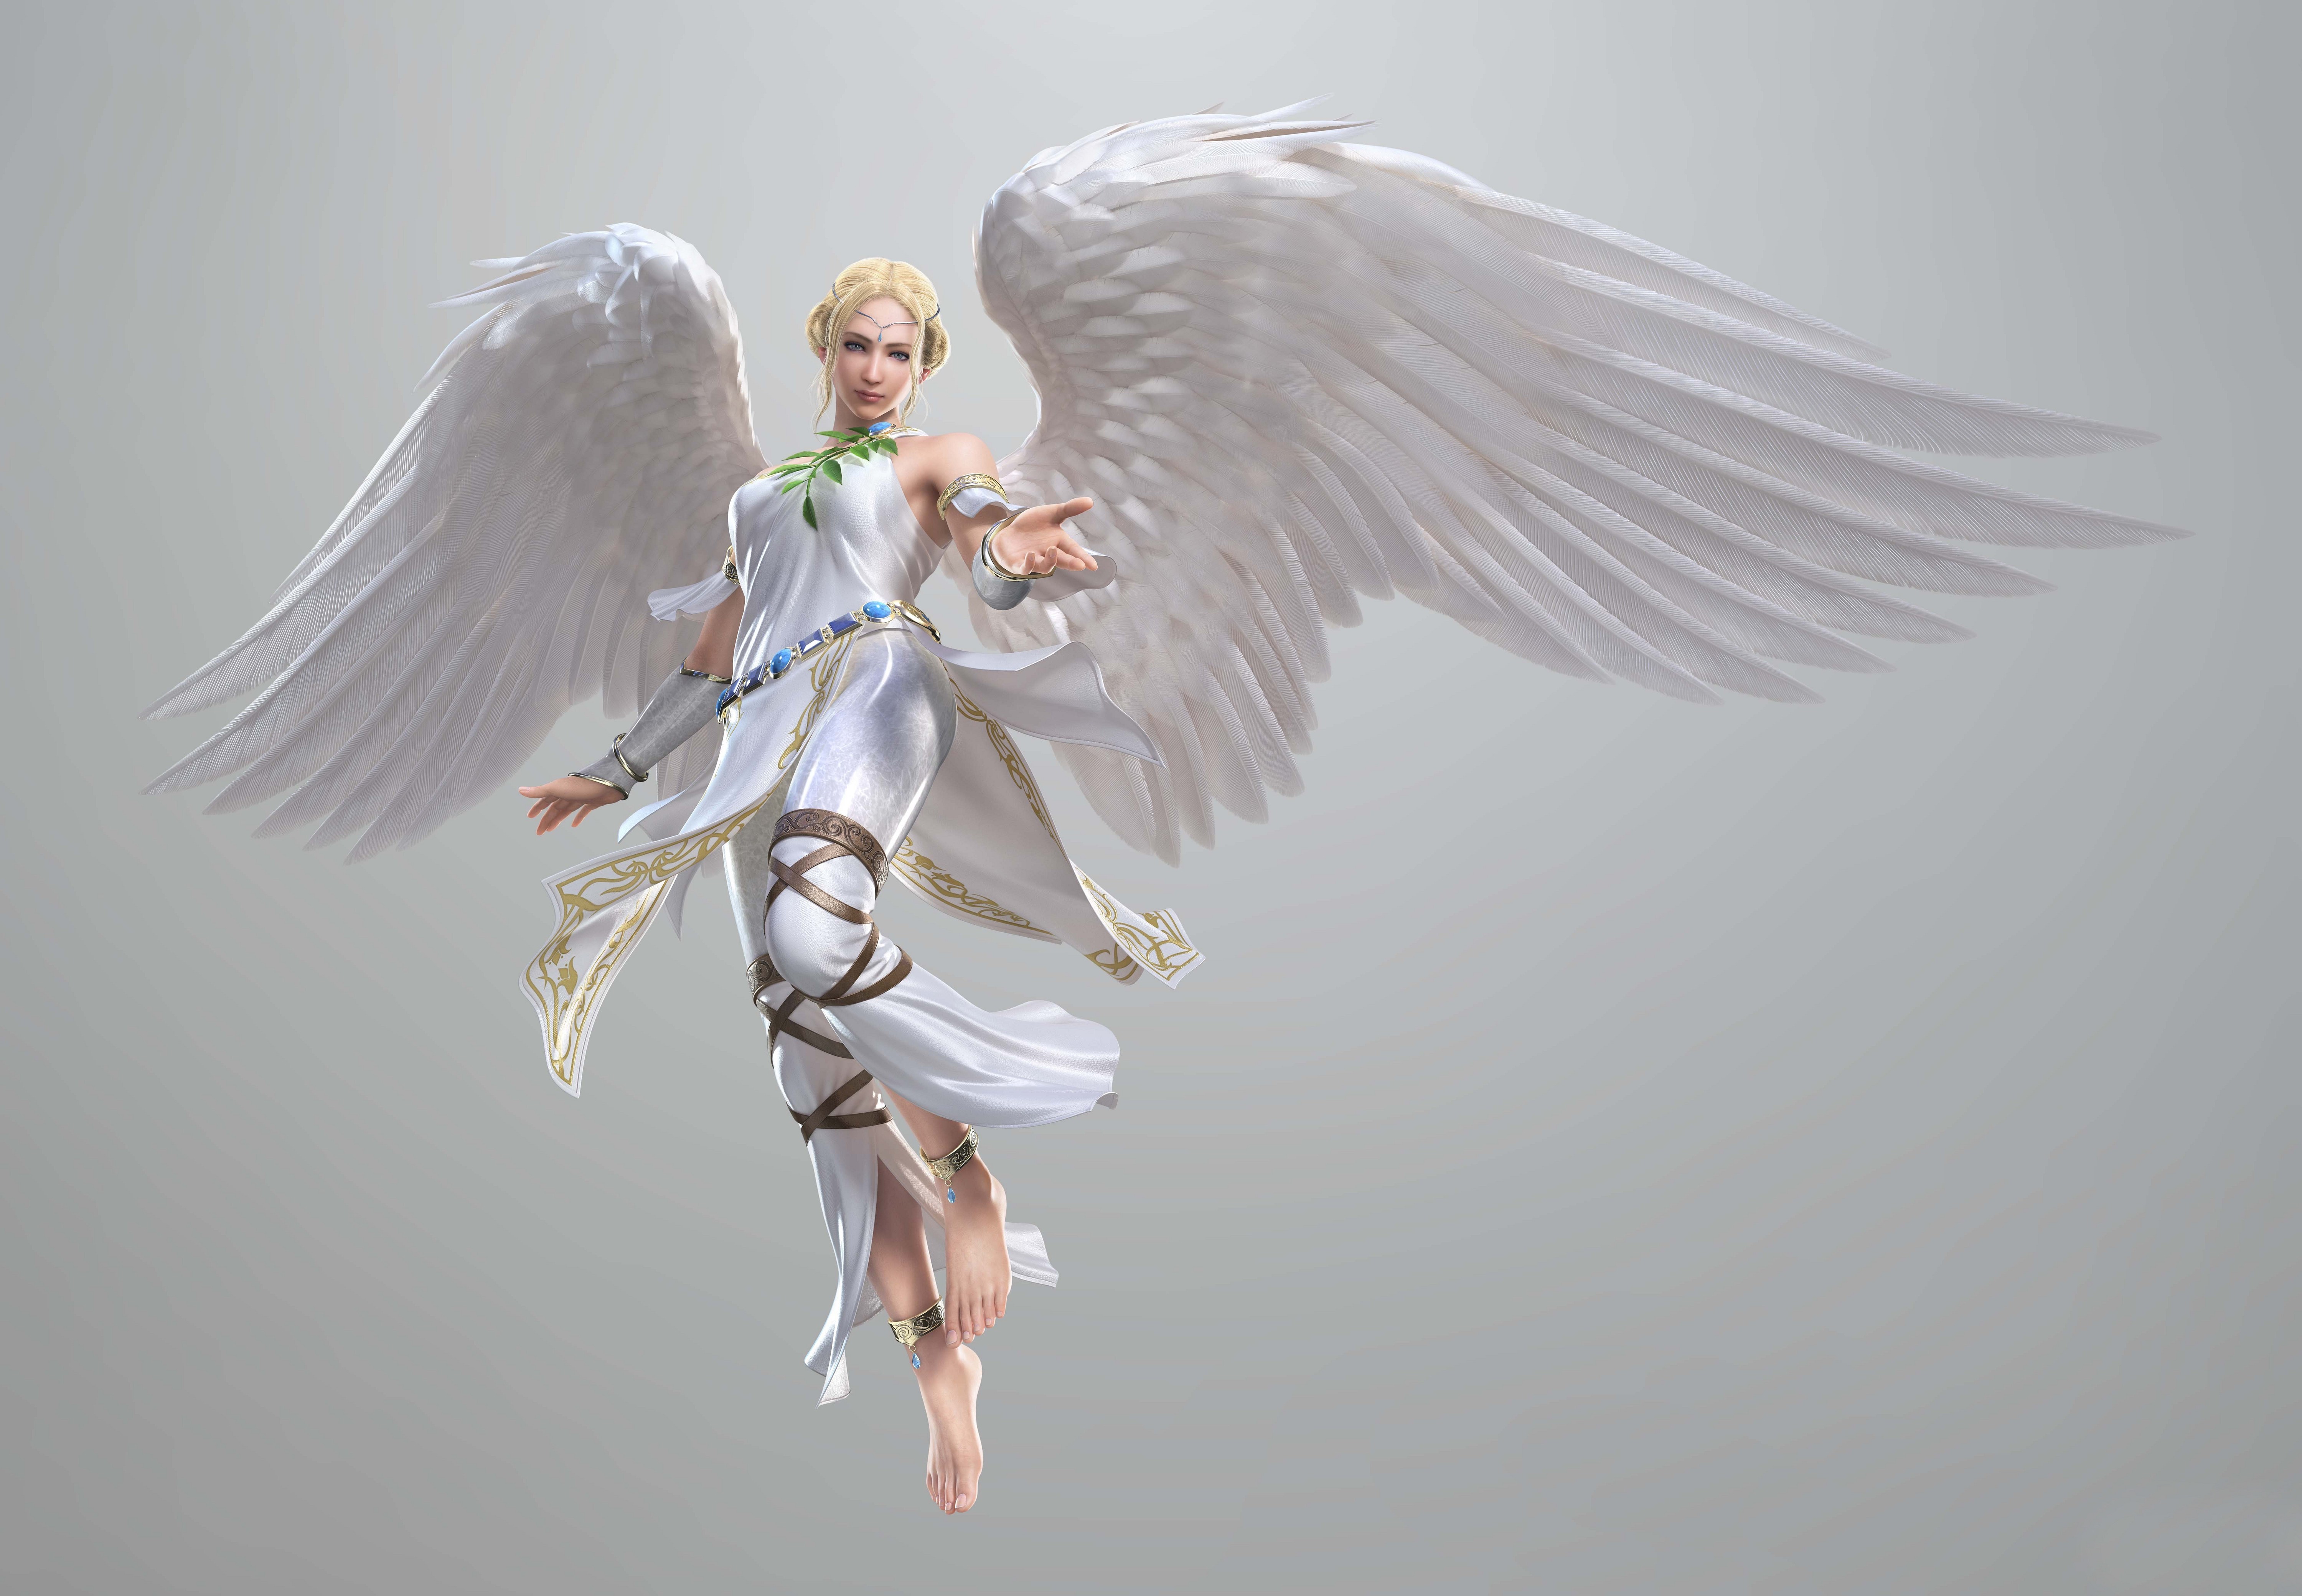 General 6000x4160 video games Tekken angel women video game art gray background fantasy girl wings barefoot dress white dress video game girls video game warriors